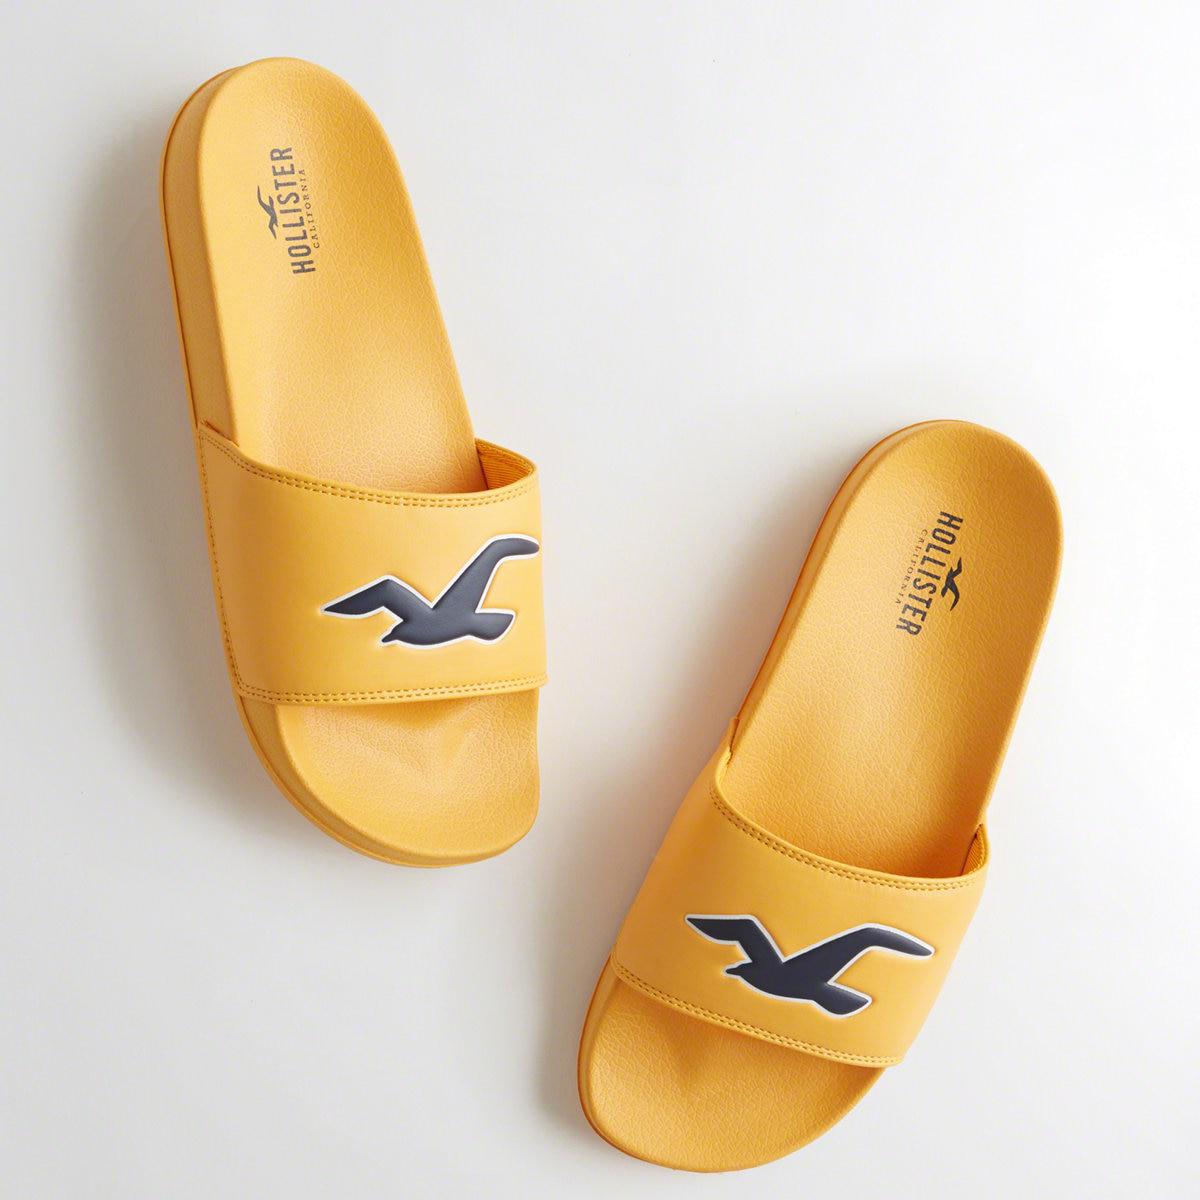 hollister slippers Online shopping has 